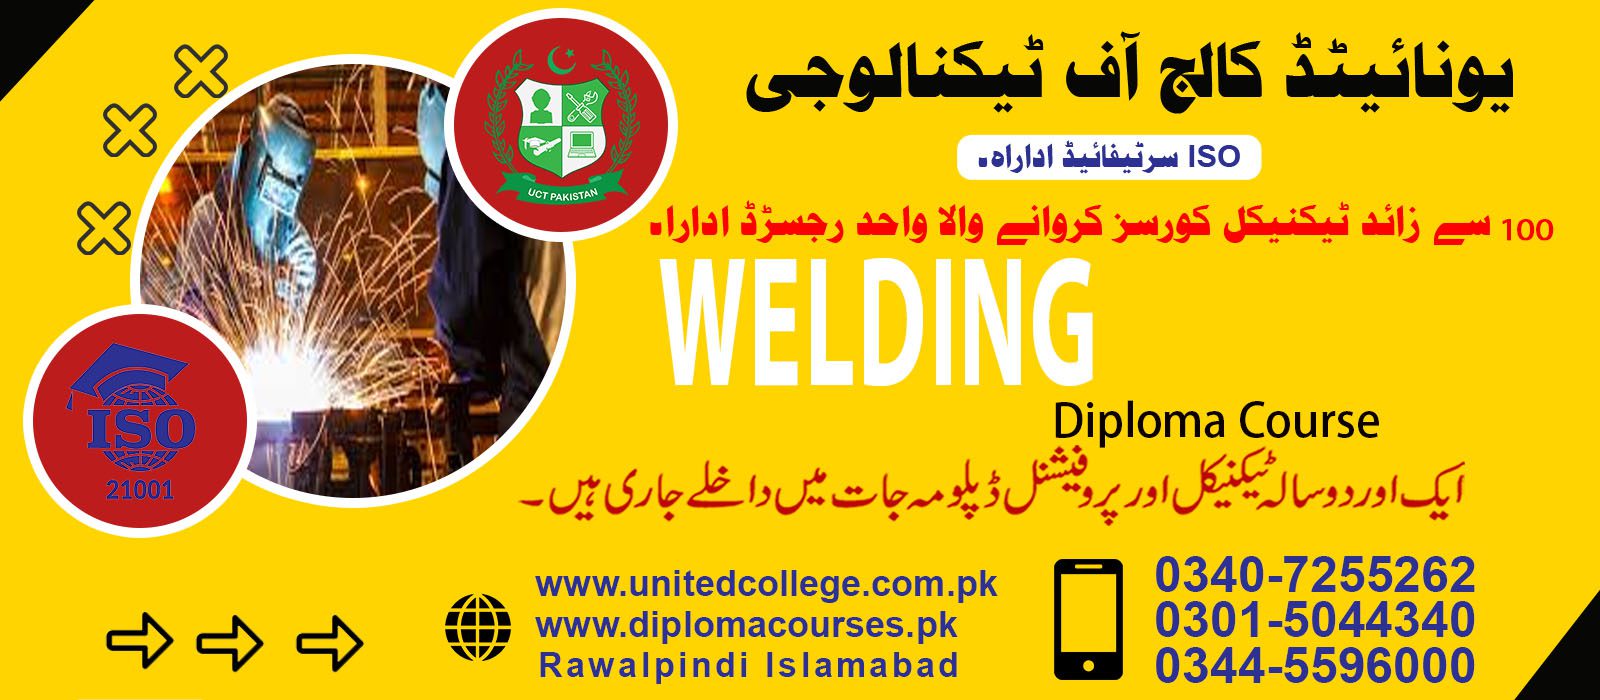 Welding Course